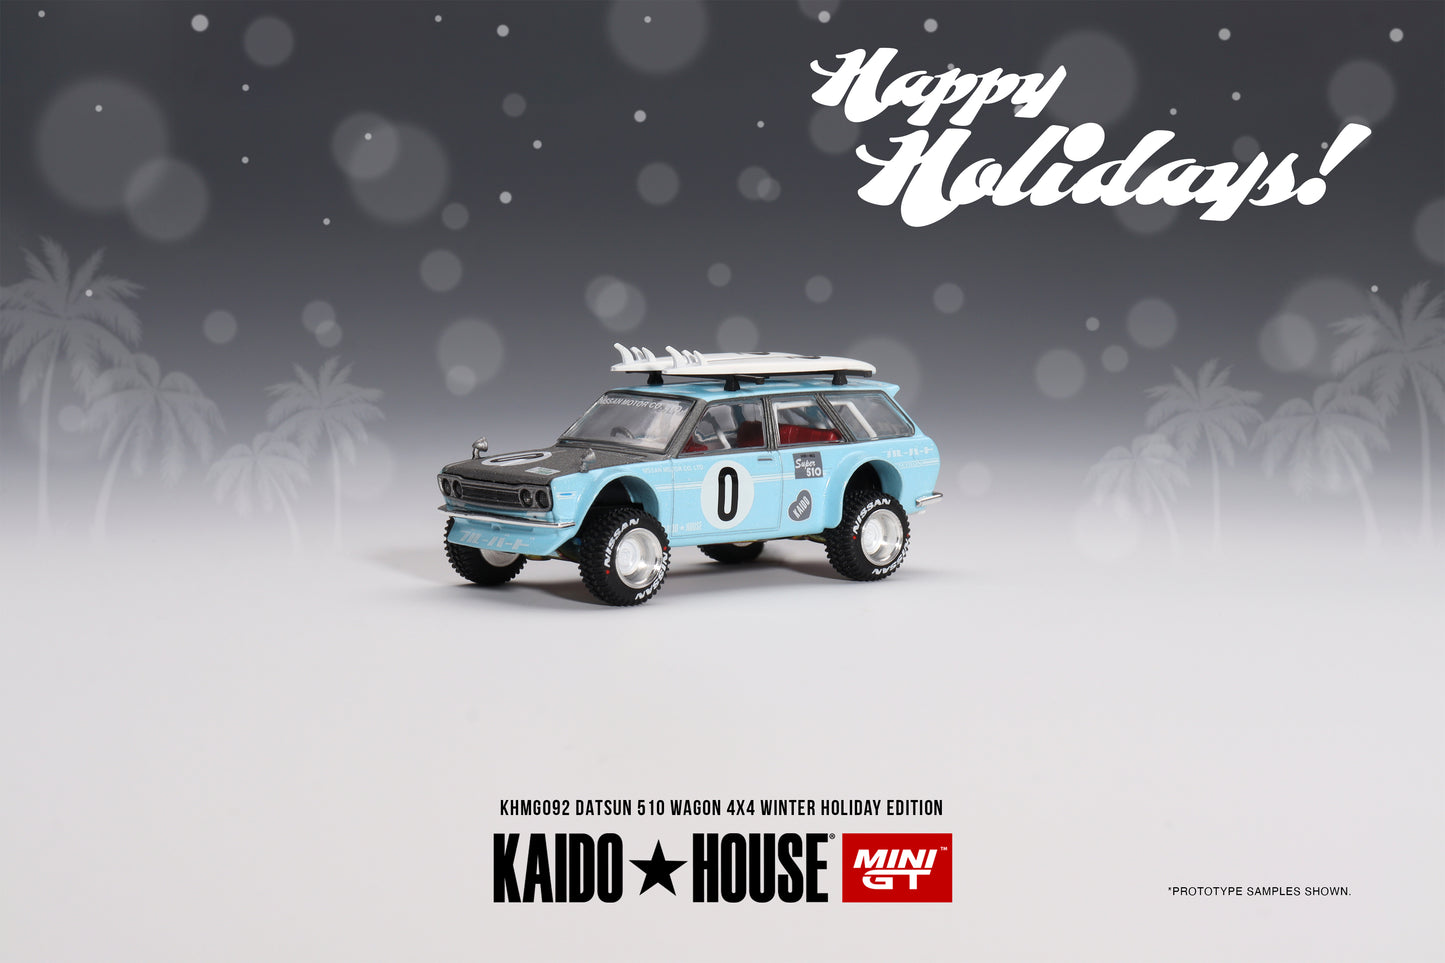 Mini GT x Kaido House No.092 Datsun Kaido 510 Wagon 4x4 Winter Holiday Edition